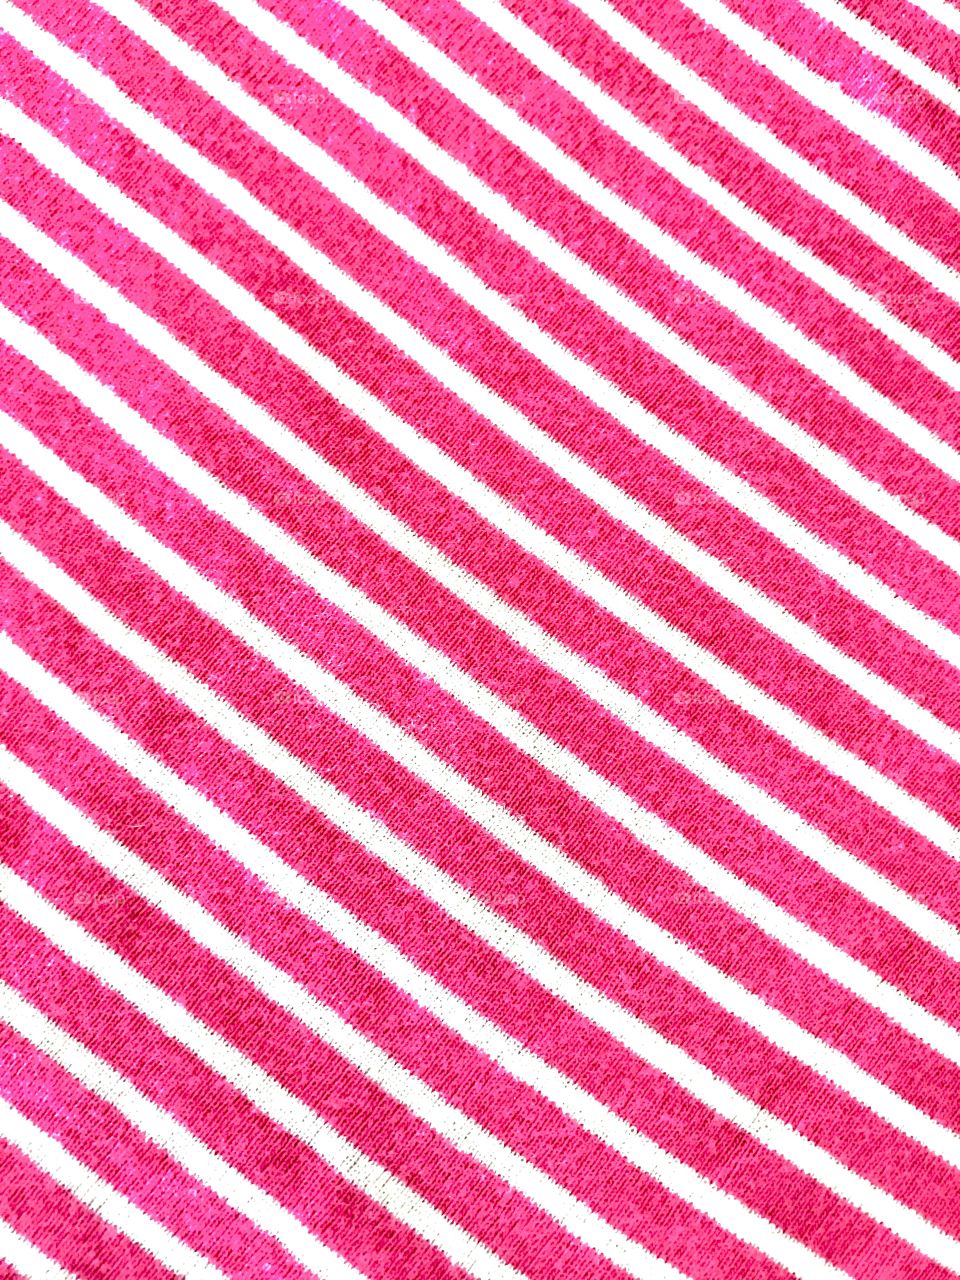 Pink Striped Shirt Close-Up